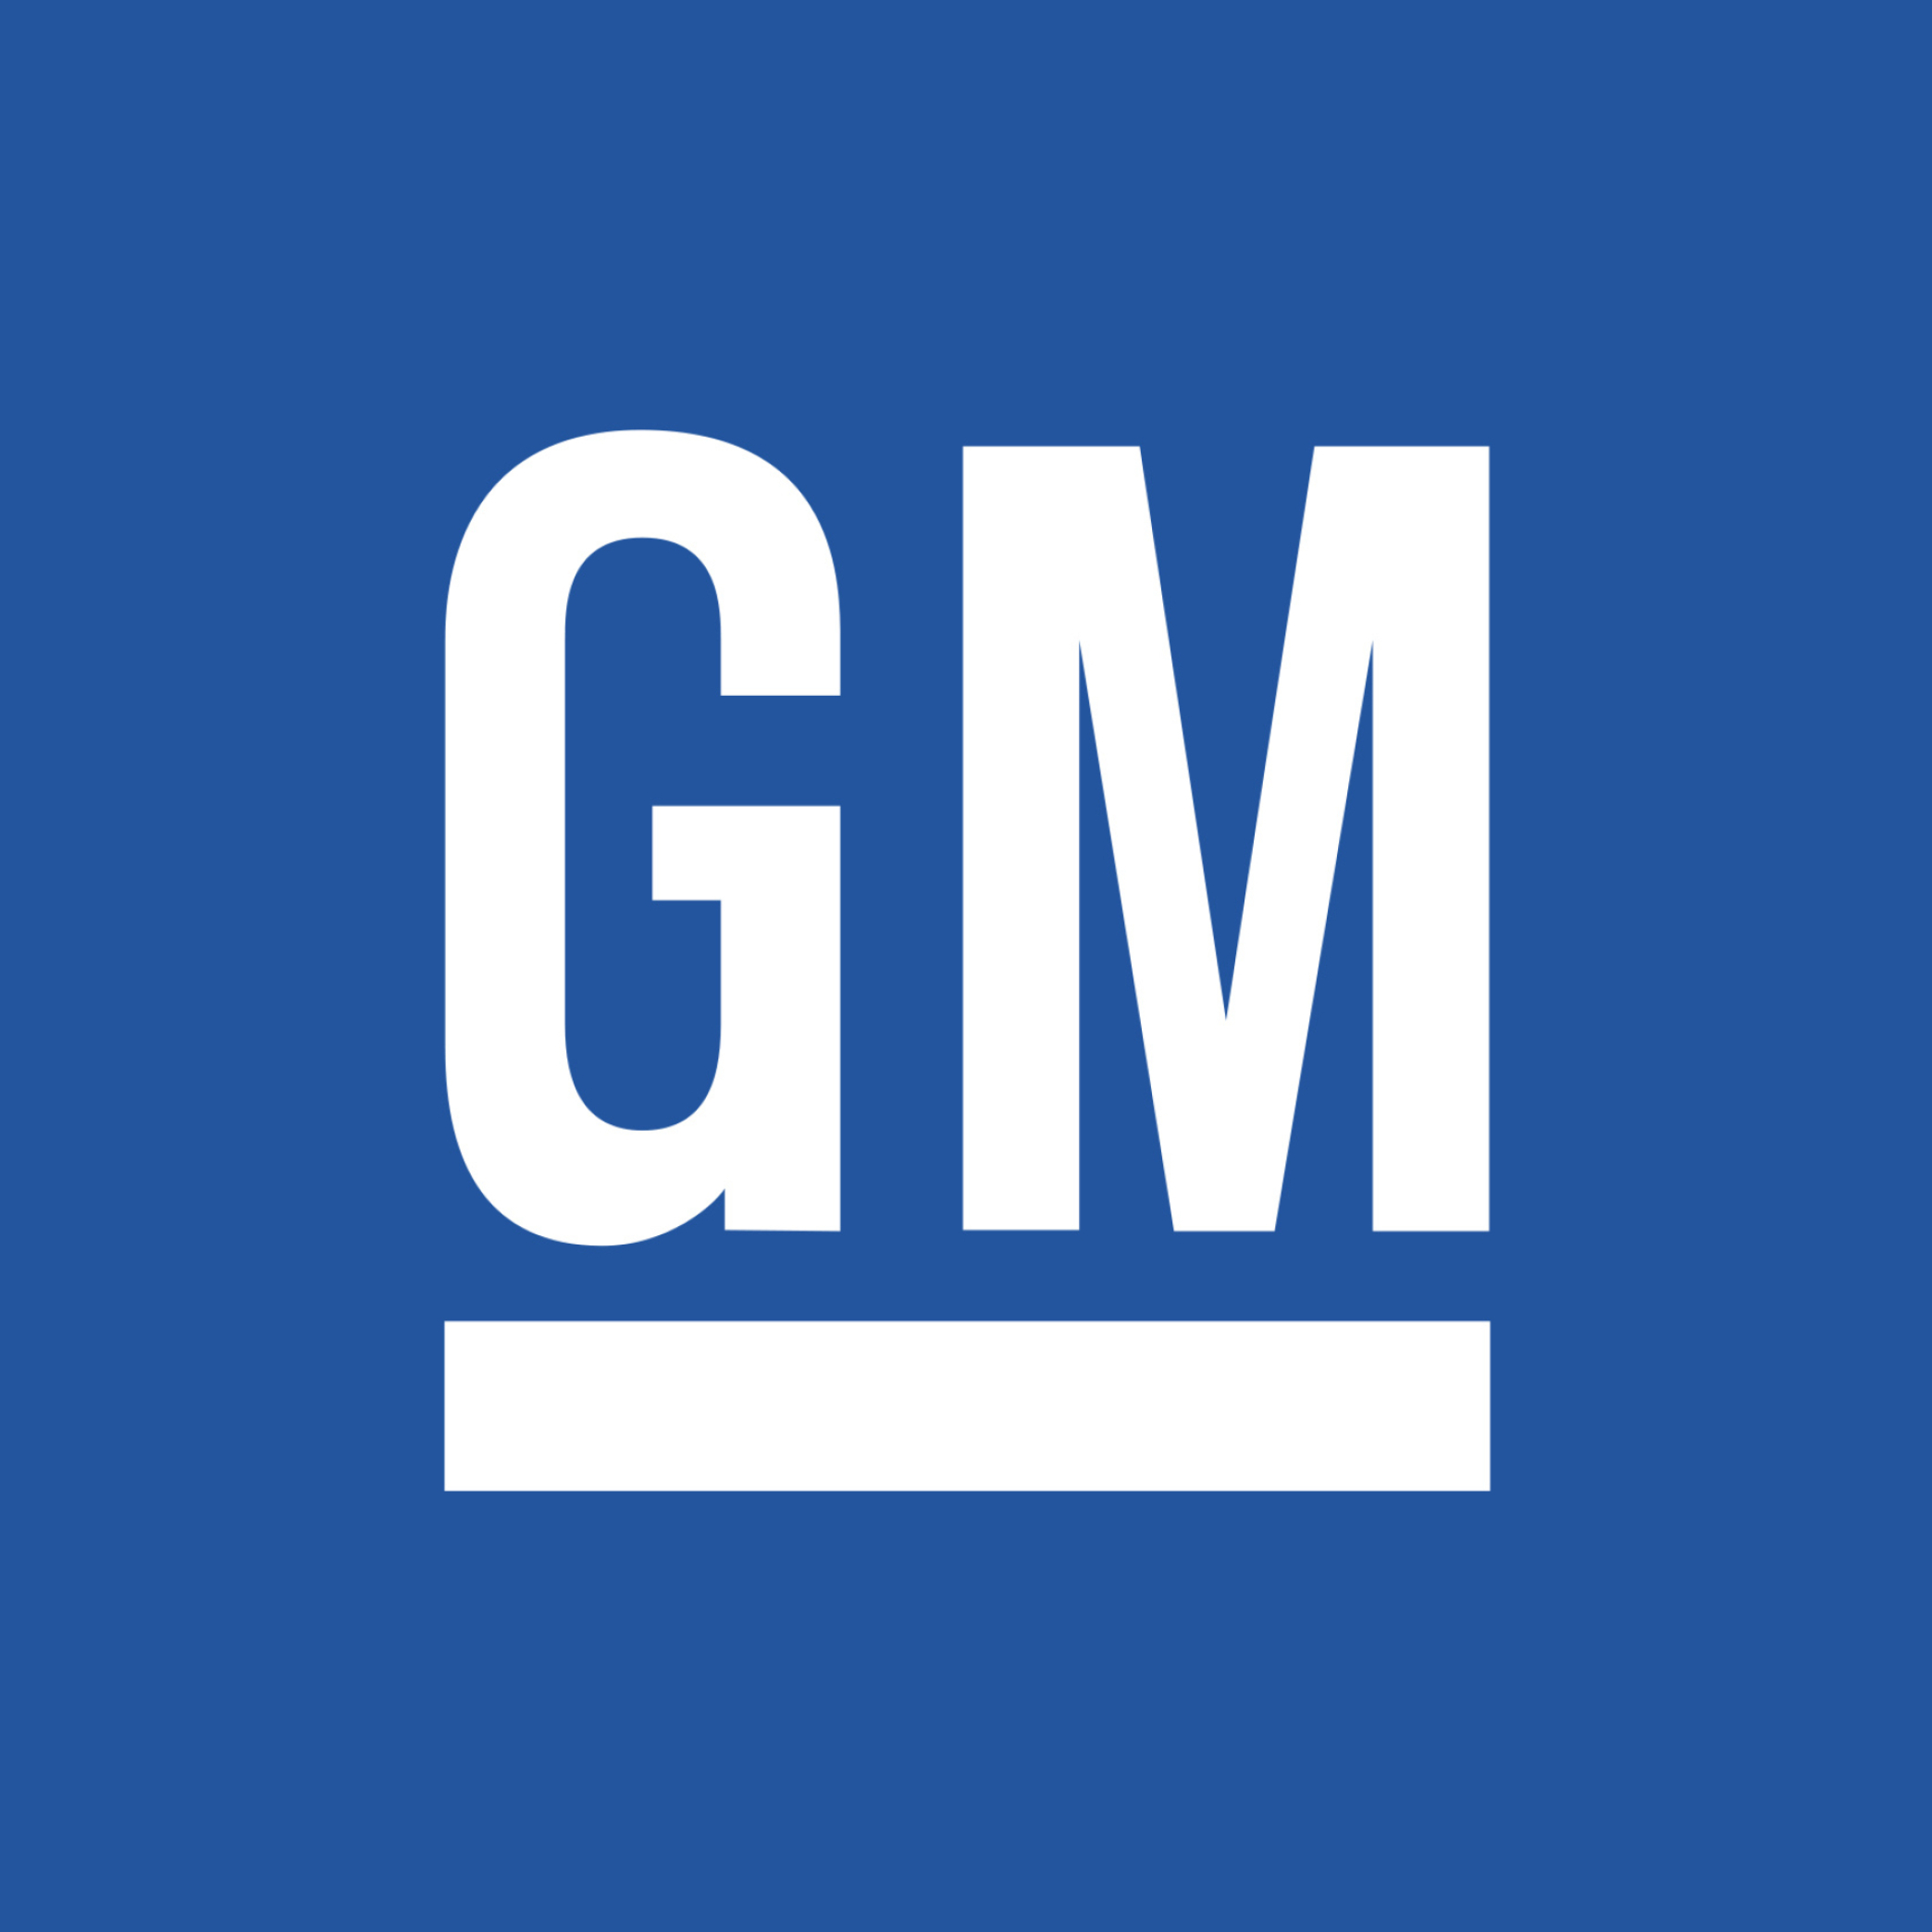 General Motors, Logo PNG image, PurePNG, PNG image library, 2090x2090 HD Handy